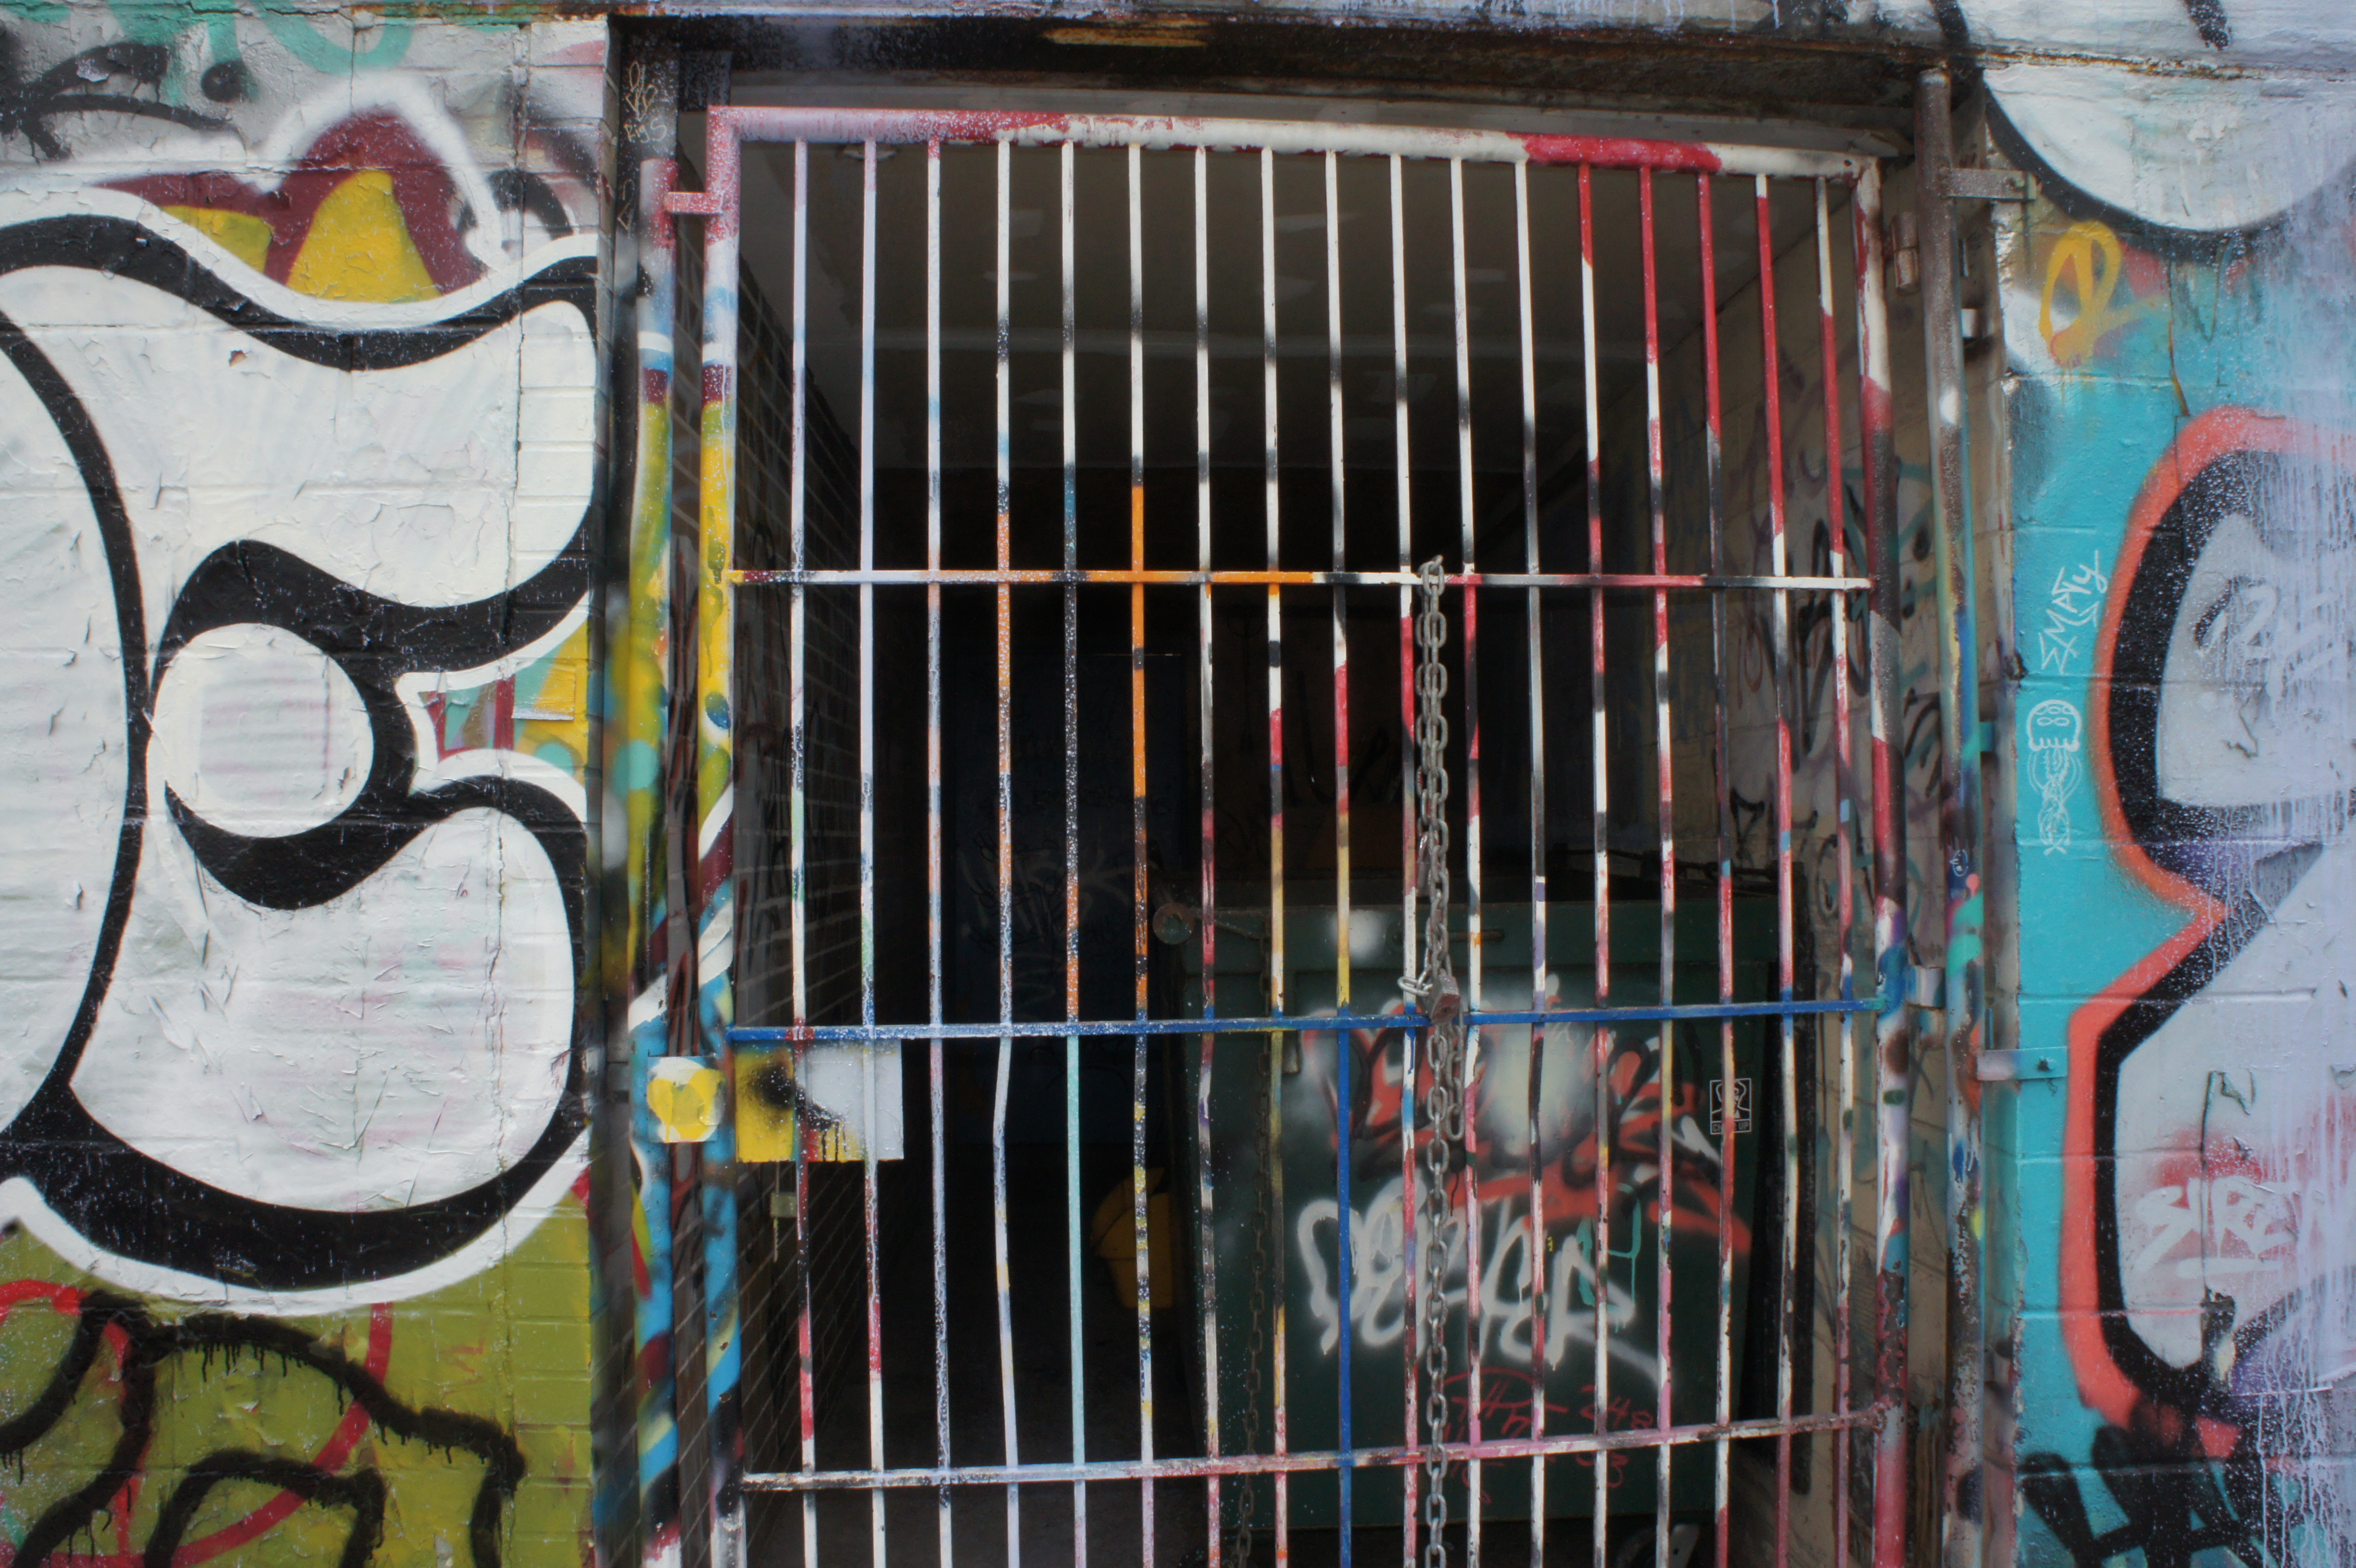 a photograph of bars and graffiti taken by Jennifer N. Shannon